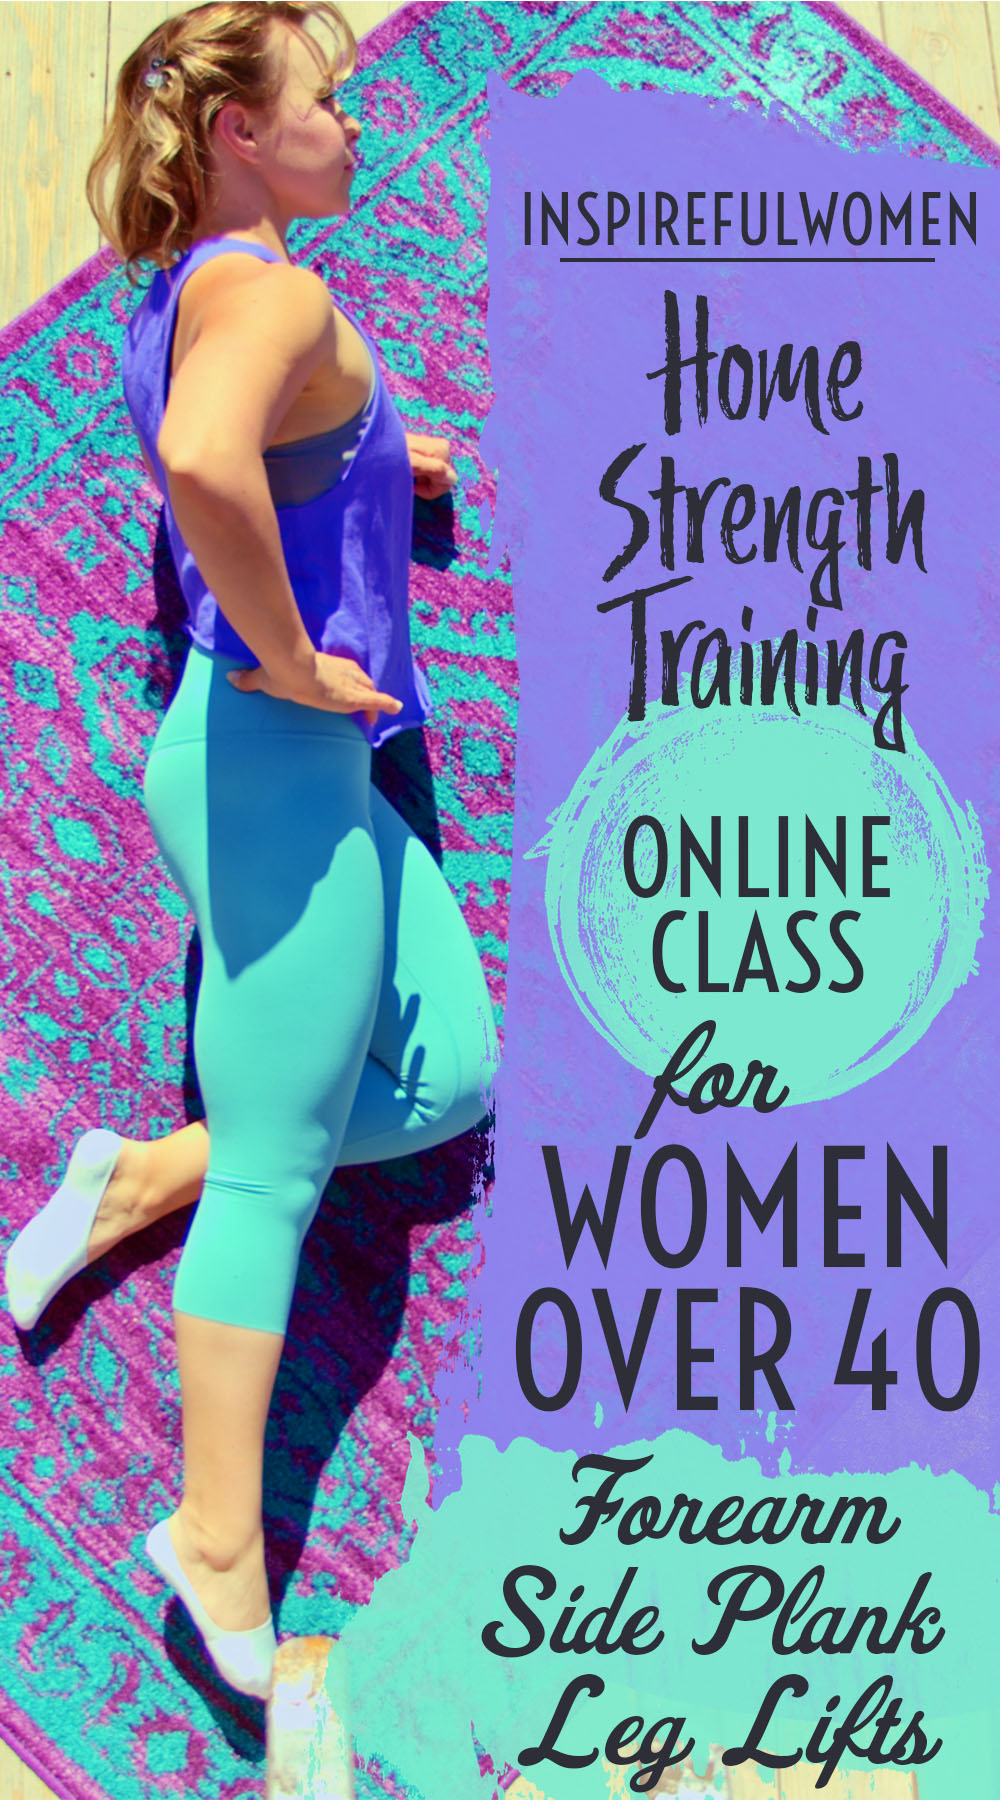 forearm-lateral-plank-leg-raise-glutes-exercise-online-class-women-40+